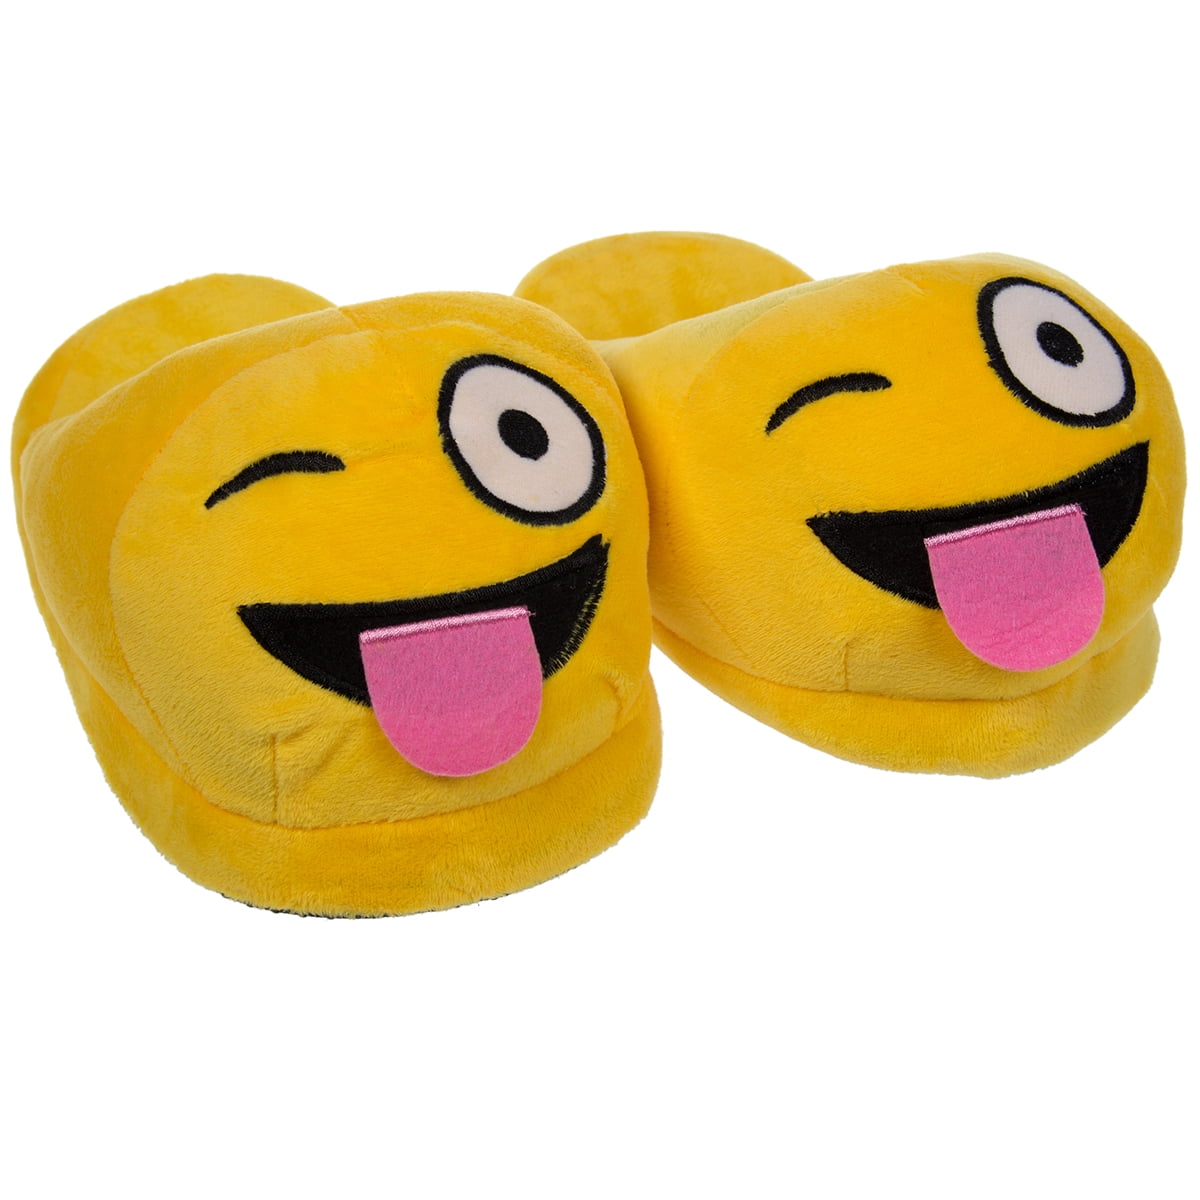 Emoji House Slippers Funny Soft Plush 